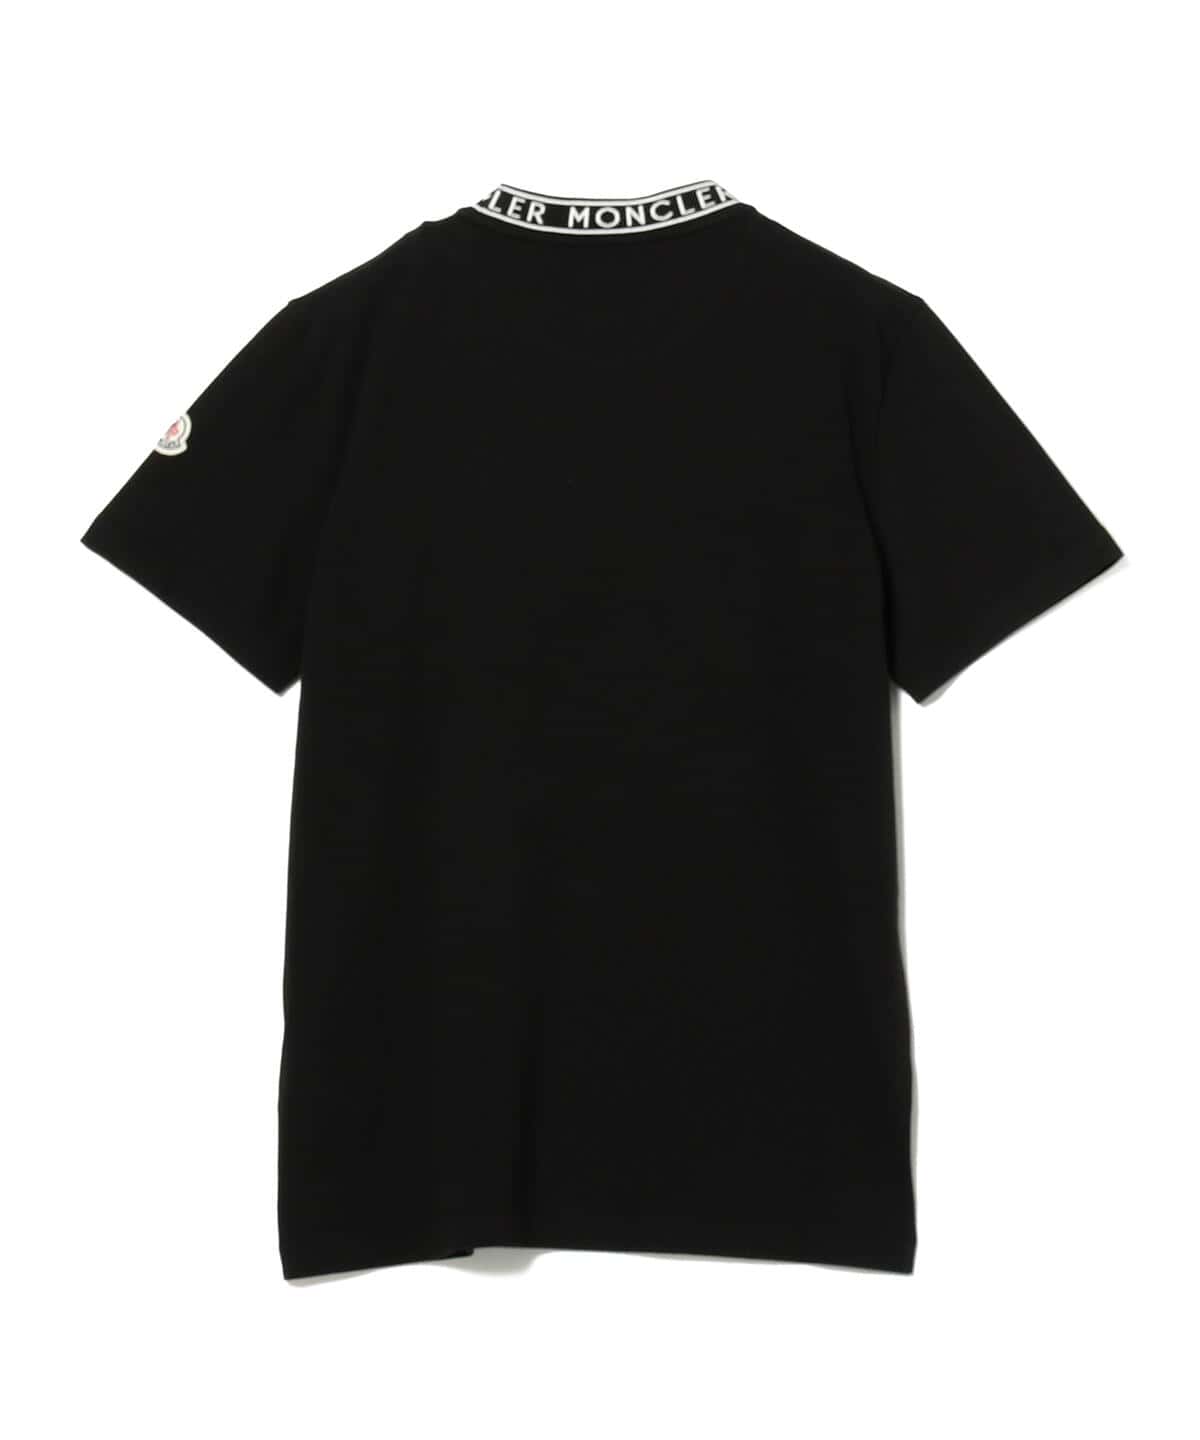 MONCLER / ロゴレタリング Tシャツ - BEAMS F